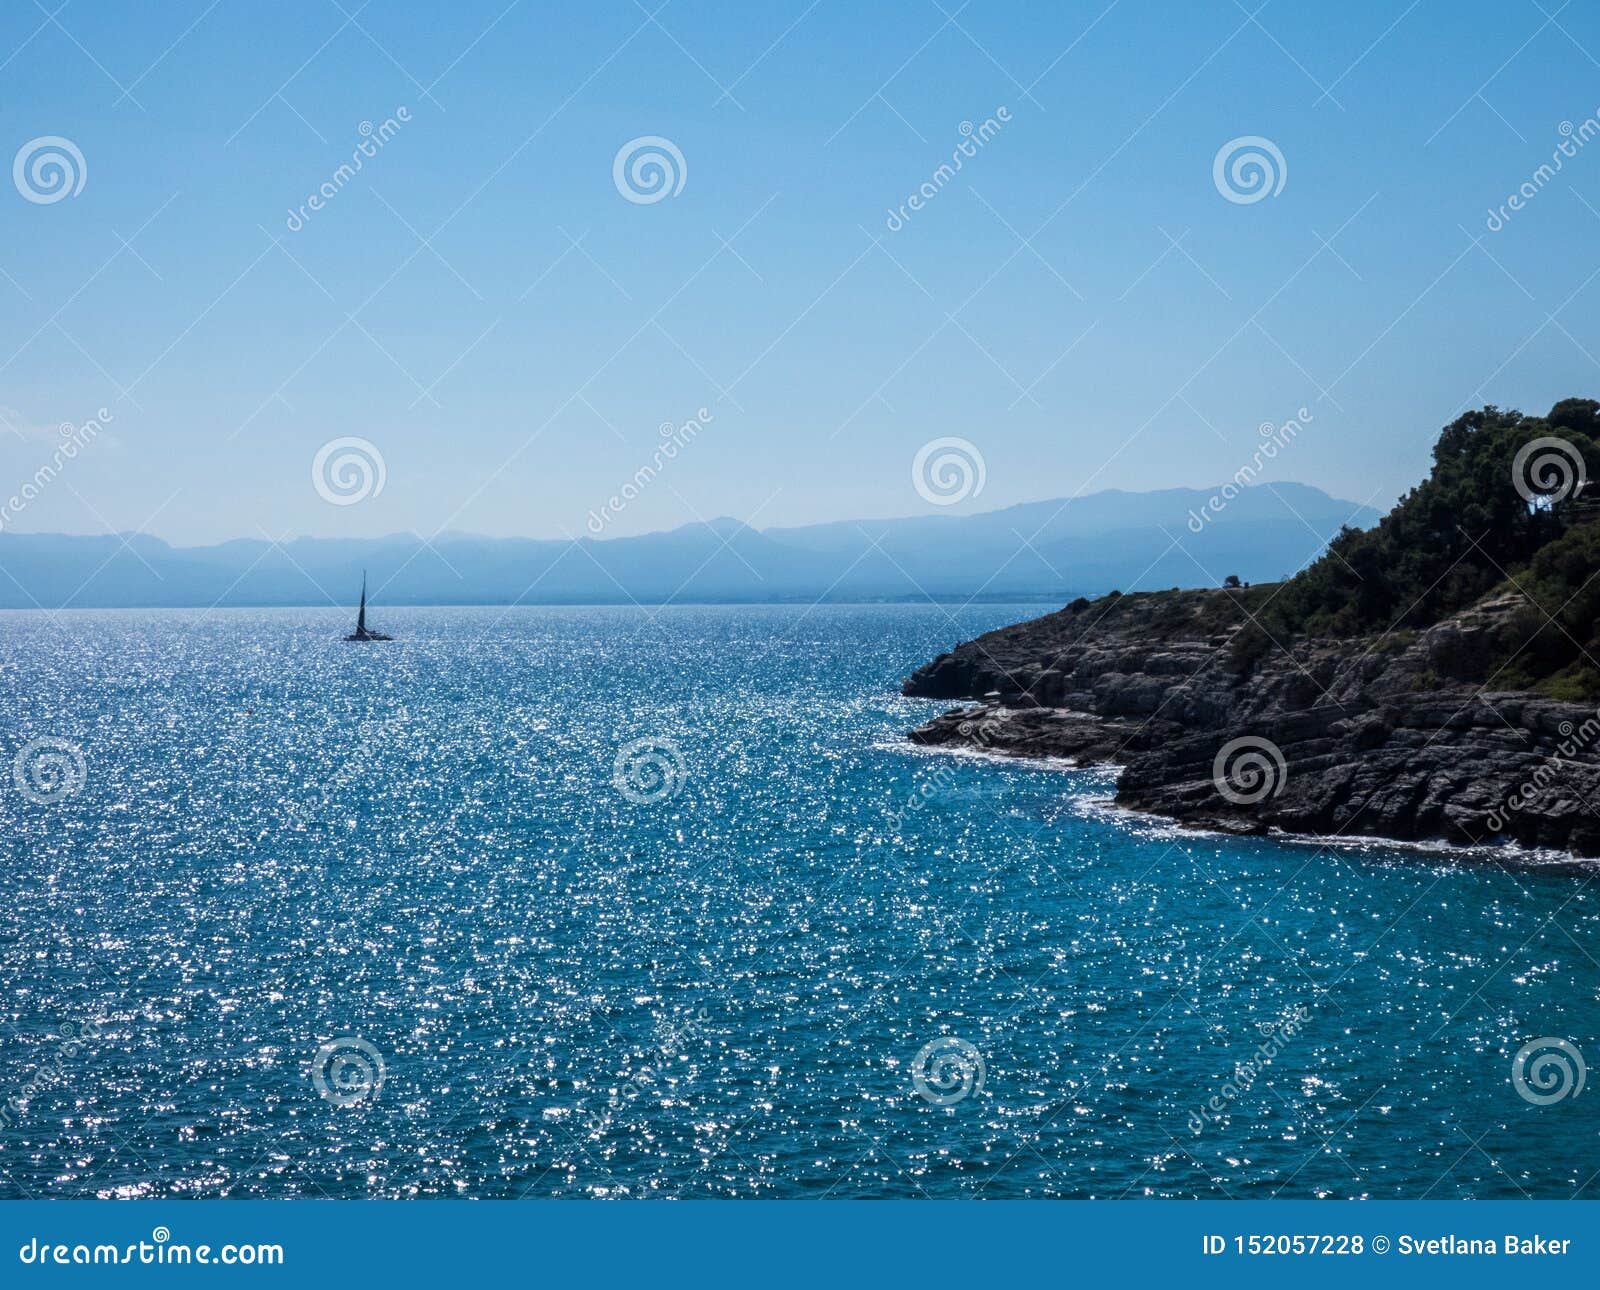 beautifu  sea view on a sunny day in salou, spain. mediterranian sea